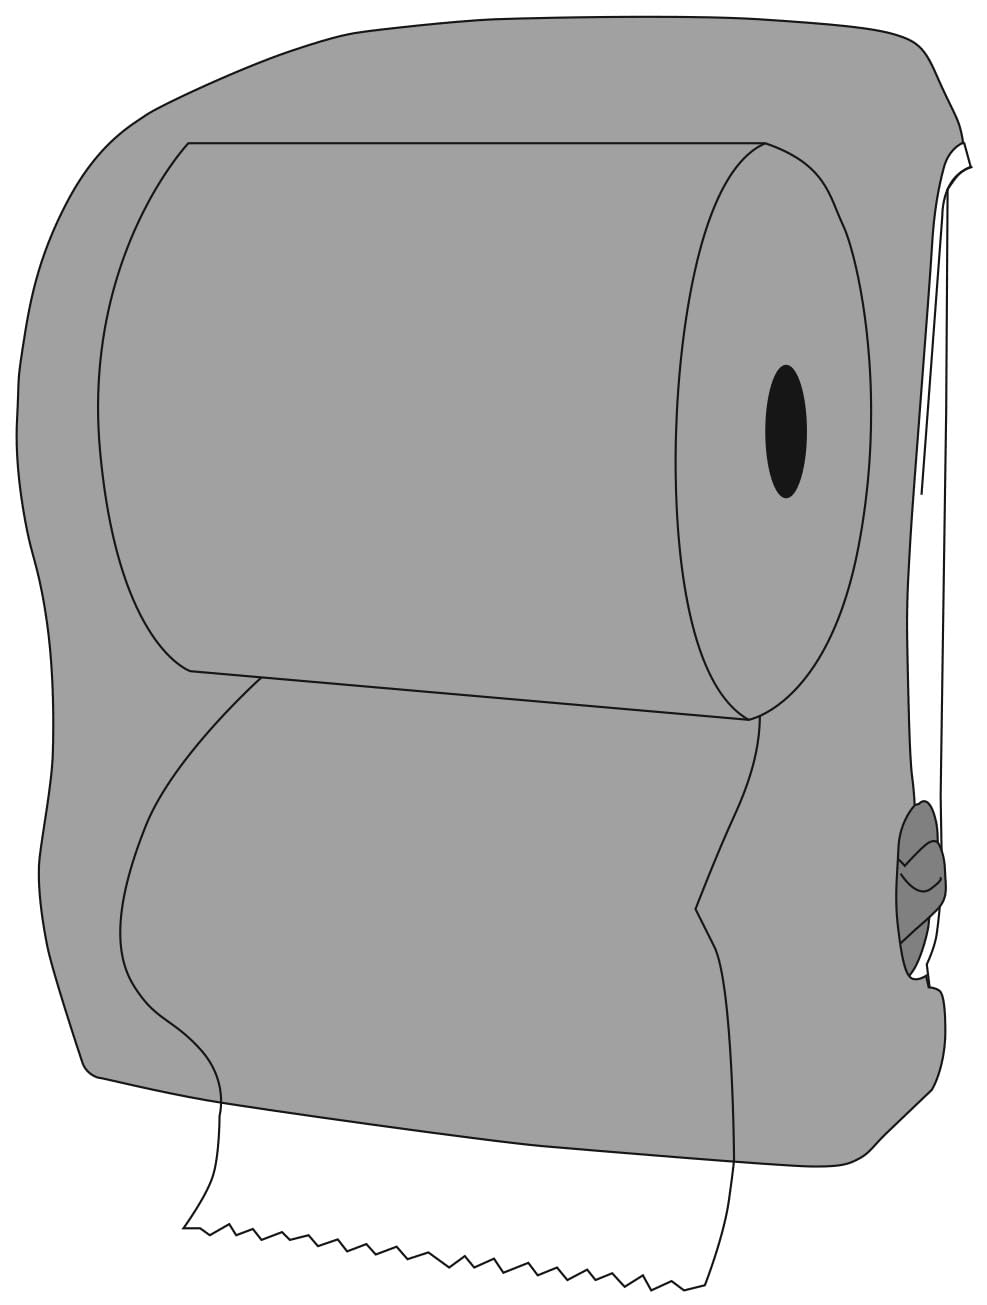 San Jamar, SJMT7400TBK, Simplicity Essence Roll Towel Dispenser, 1 Each, Black Pearl, 15.1" x 12.4" x 9.3